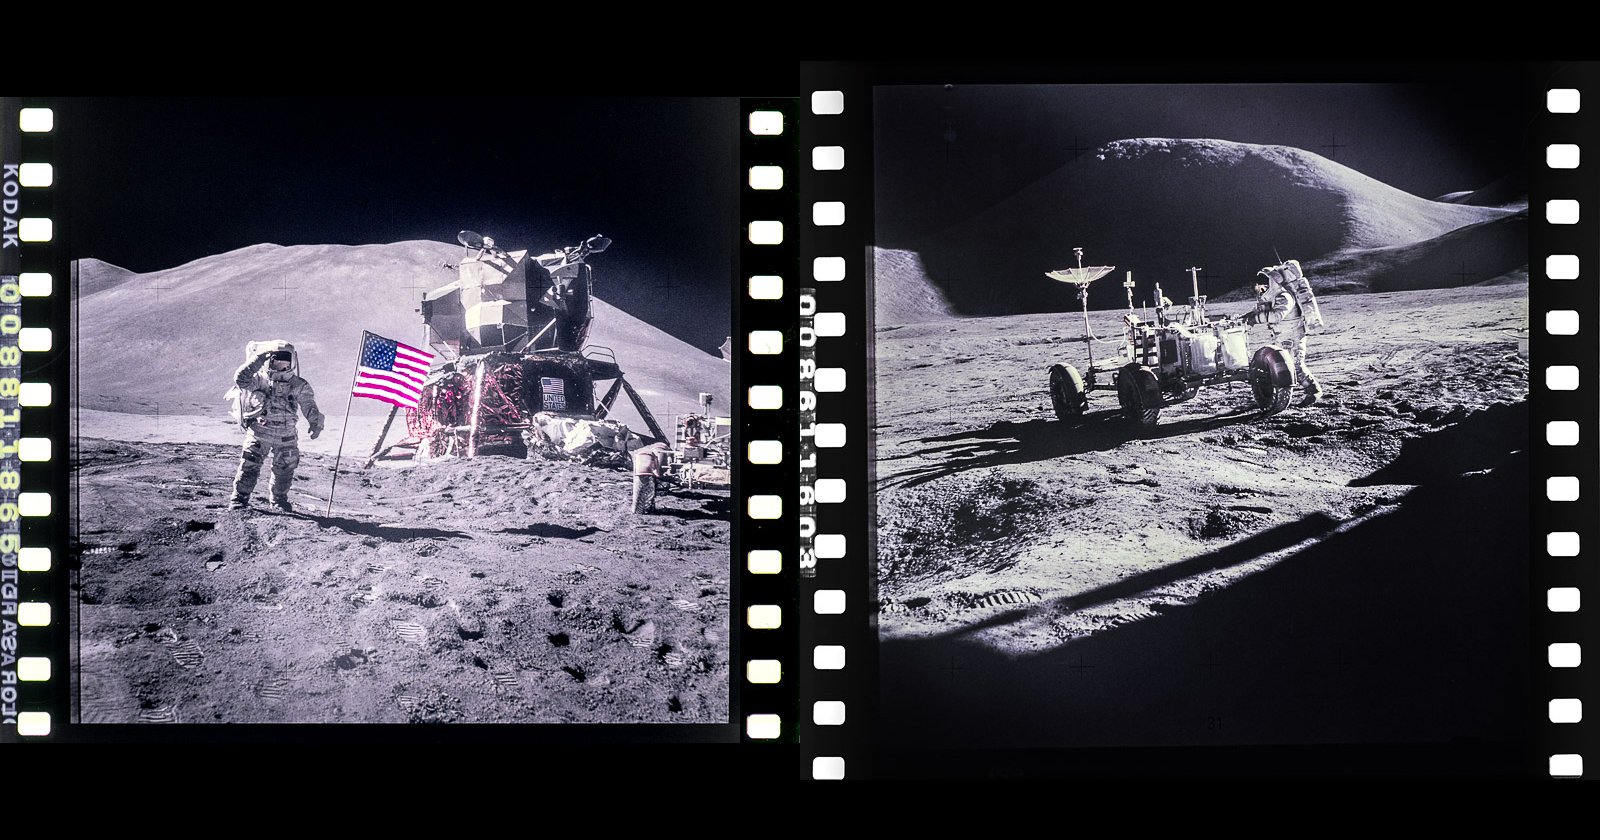 My NASA Friend Found a Box of Film from Apollo 15 in His Desk Drawer